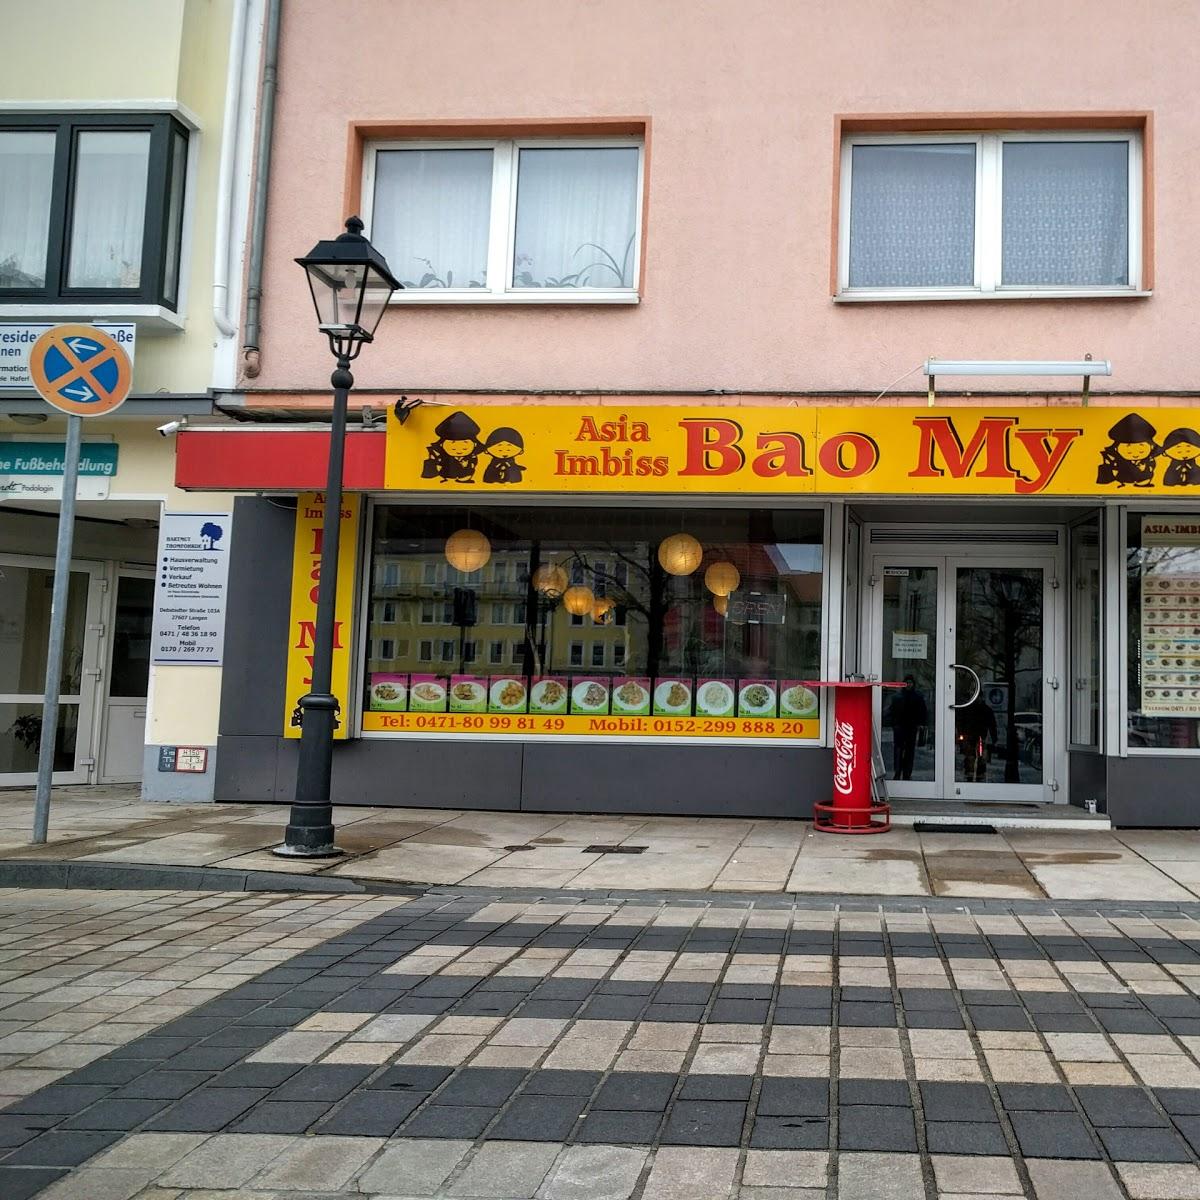 Restaurant "Bao My Asia-Imbiss" in Bremerhaven